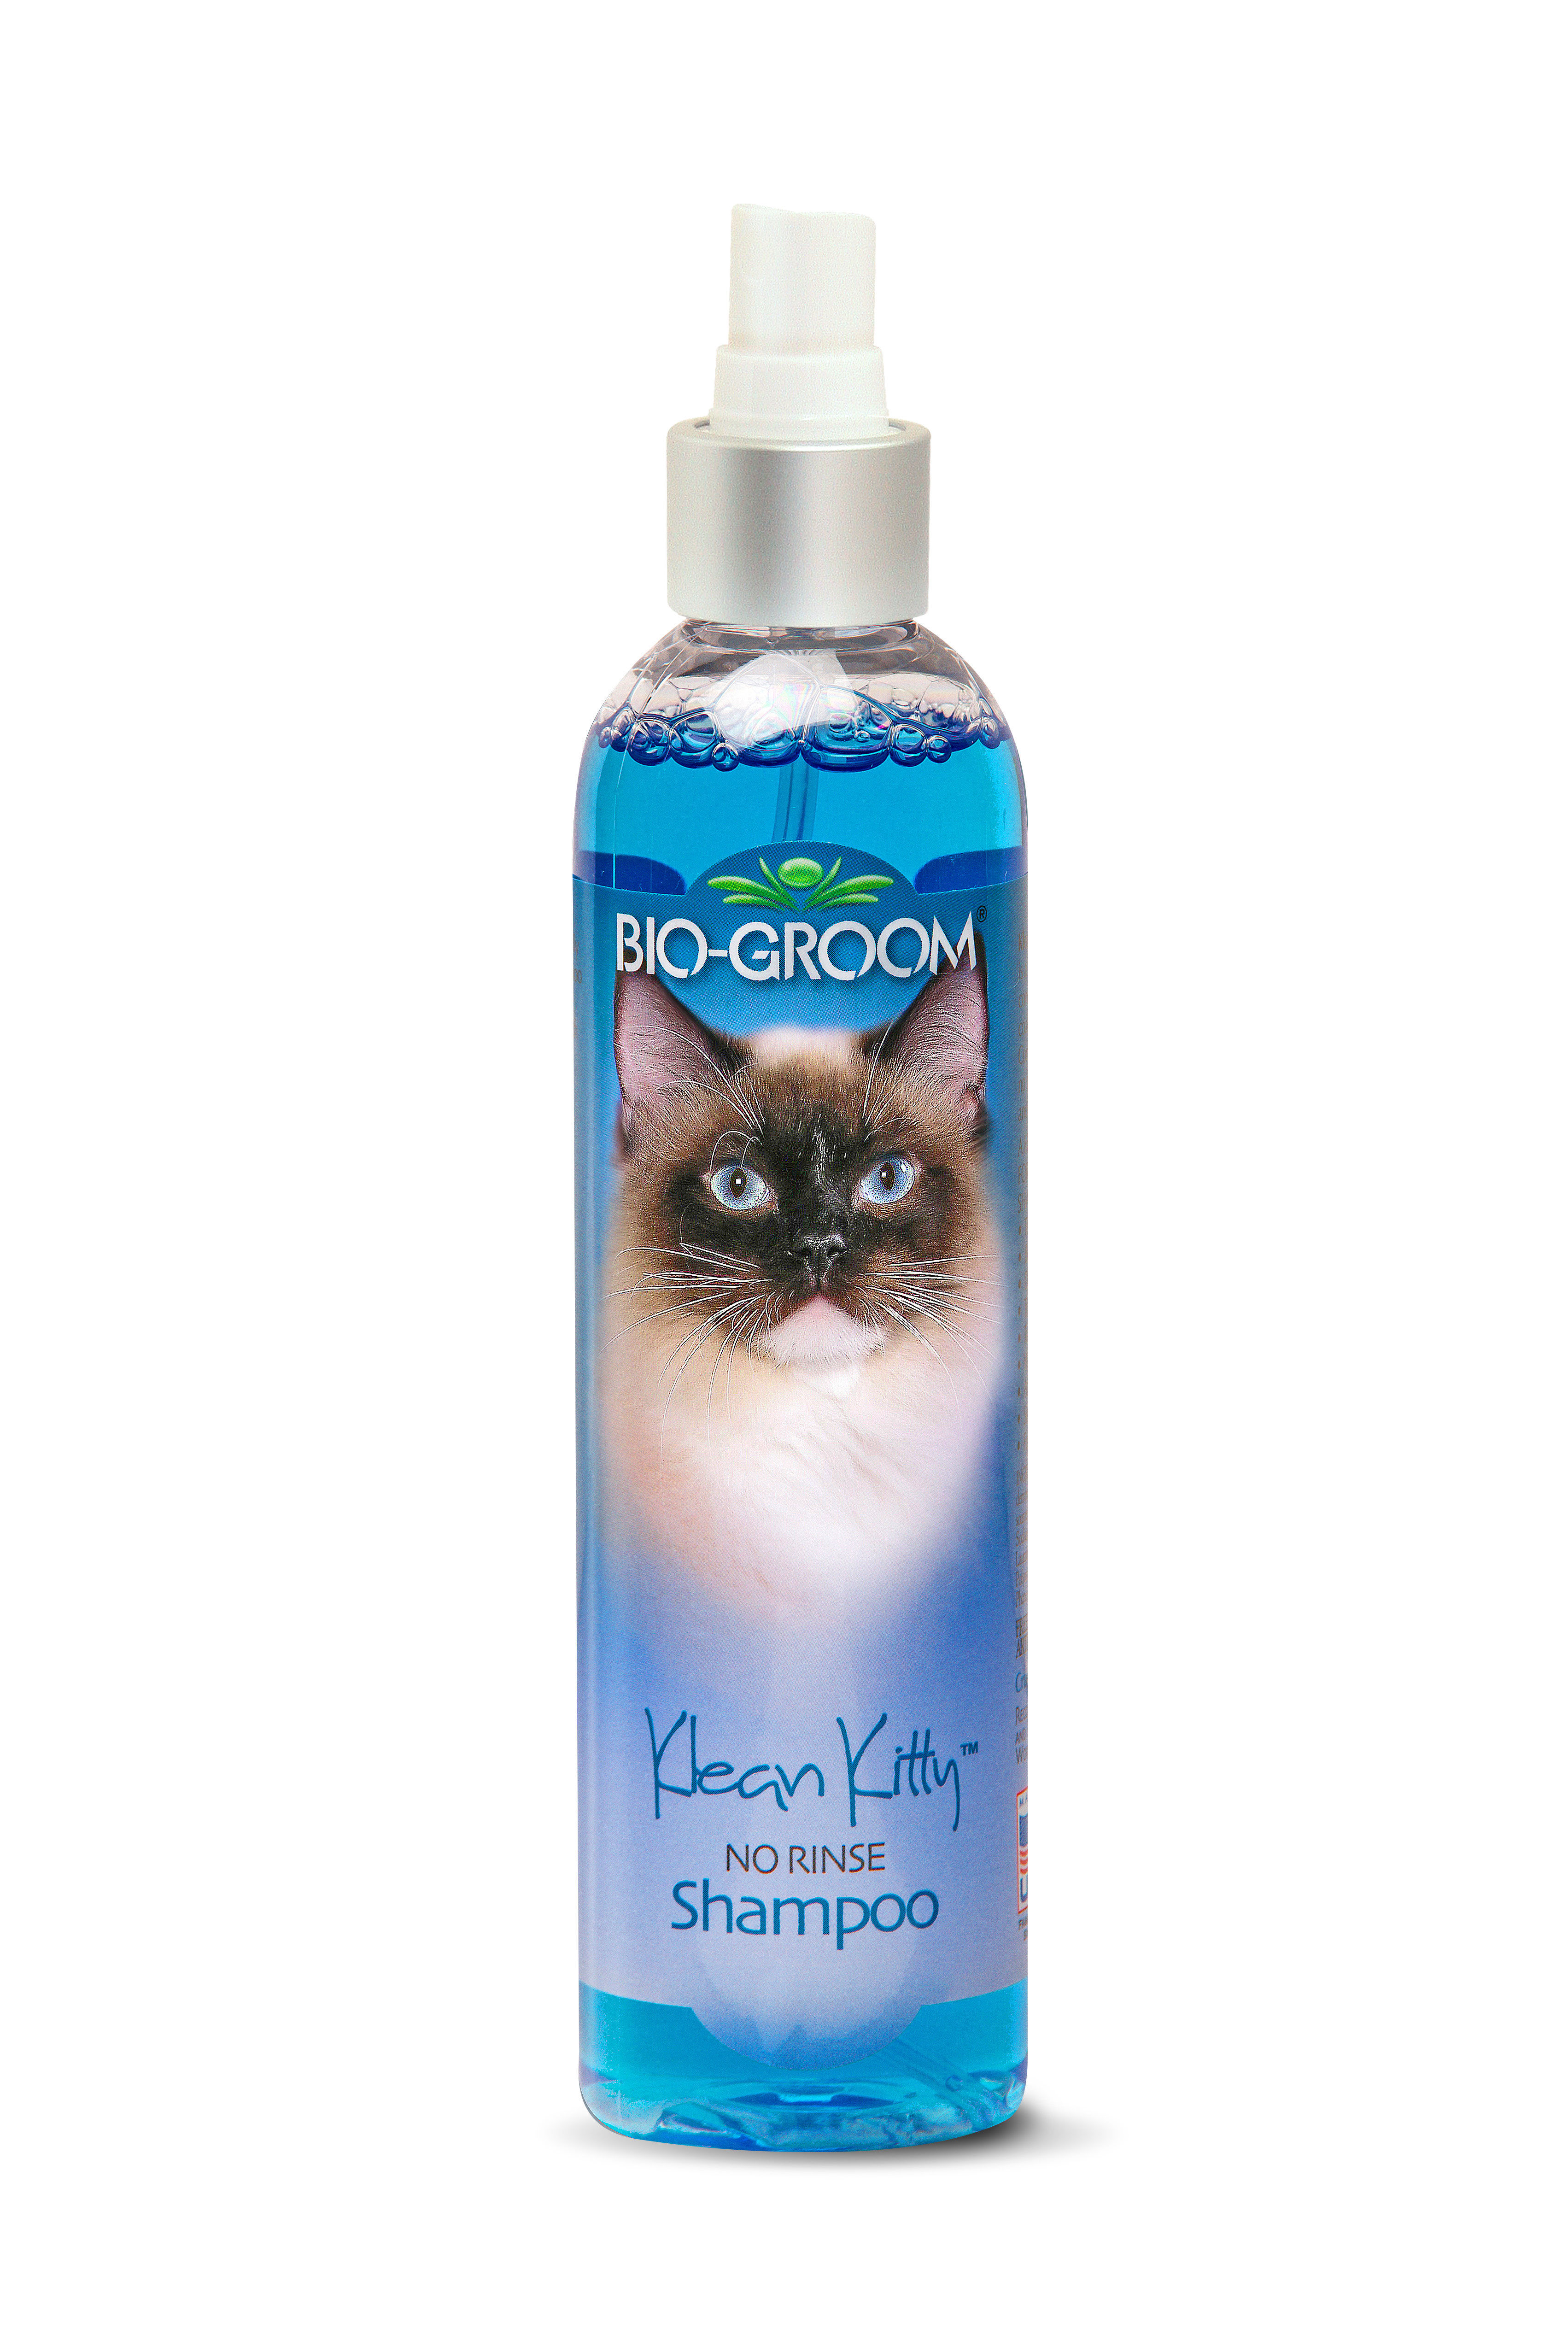 Bio-Groom Purrfect White Cat Conditioning Shampoo